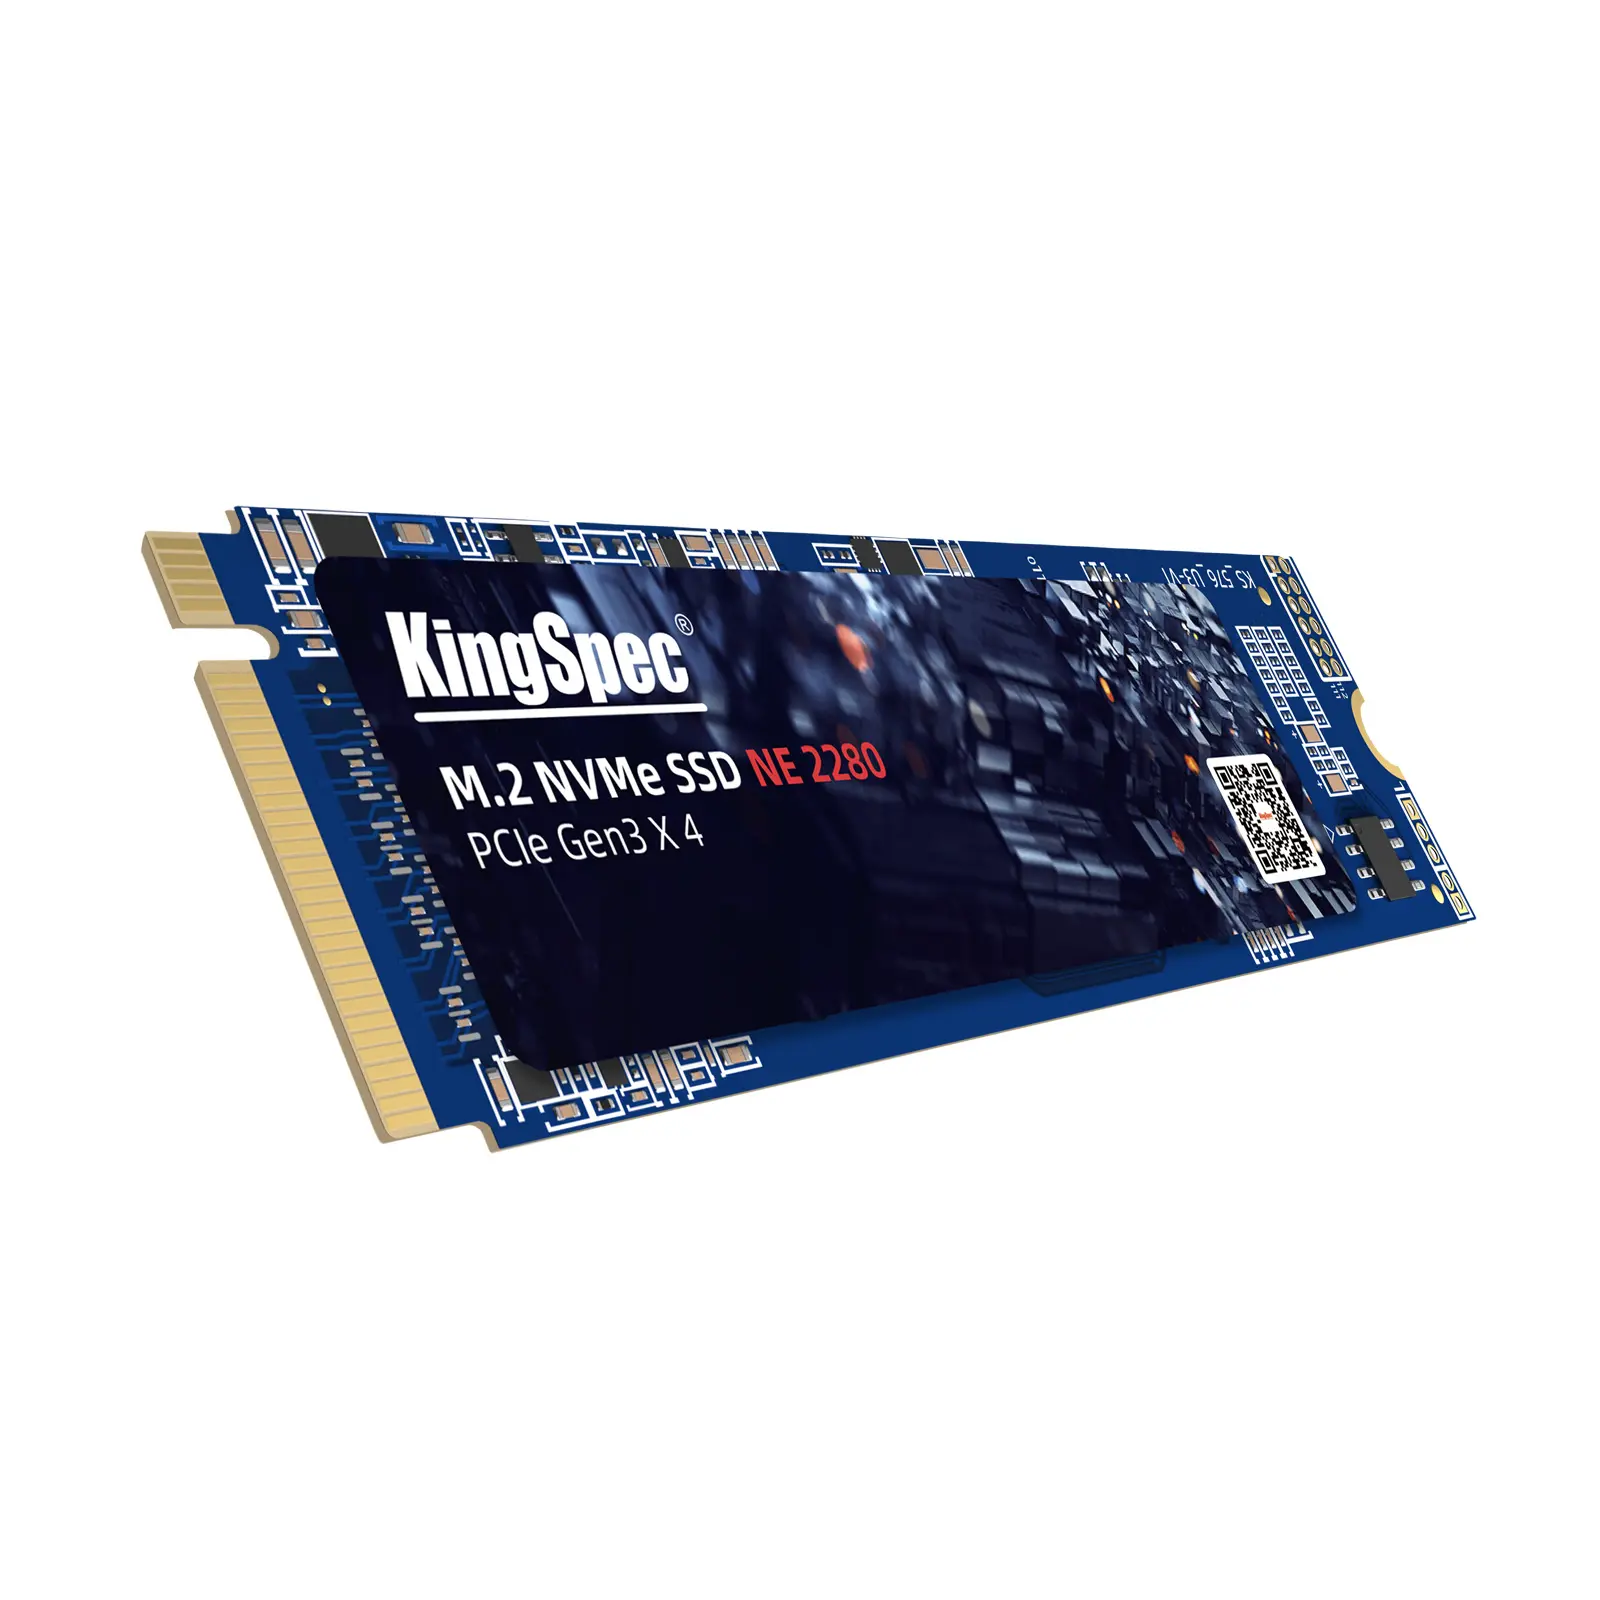 KingSpec SSD 256GB M.2 2280 NVMe PCI-e Gen3.0 x4 3D NAND Internal Solid State Drive